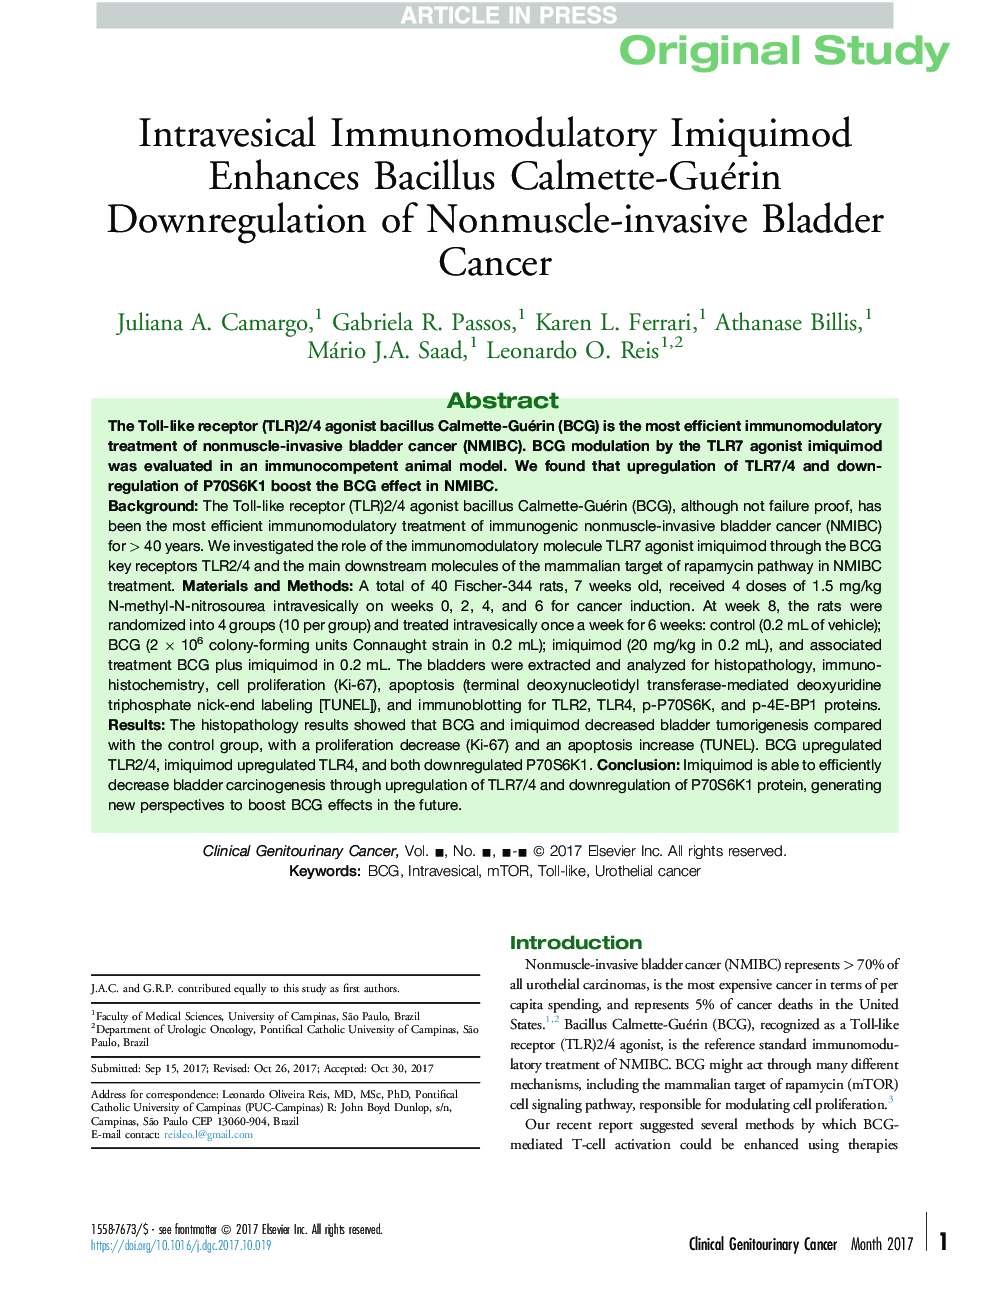 Intravesical Immunomodulatory Imiquimod Enhances Bacillus Calmette-Guérin Downregulation of Nonmuscle-invasive Bladder Cancer